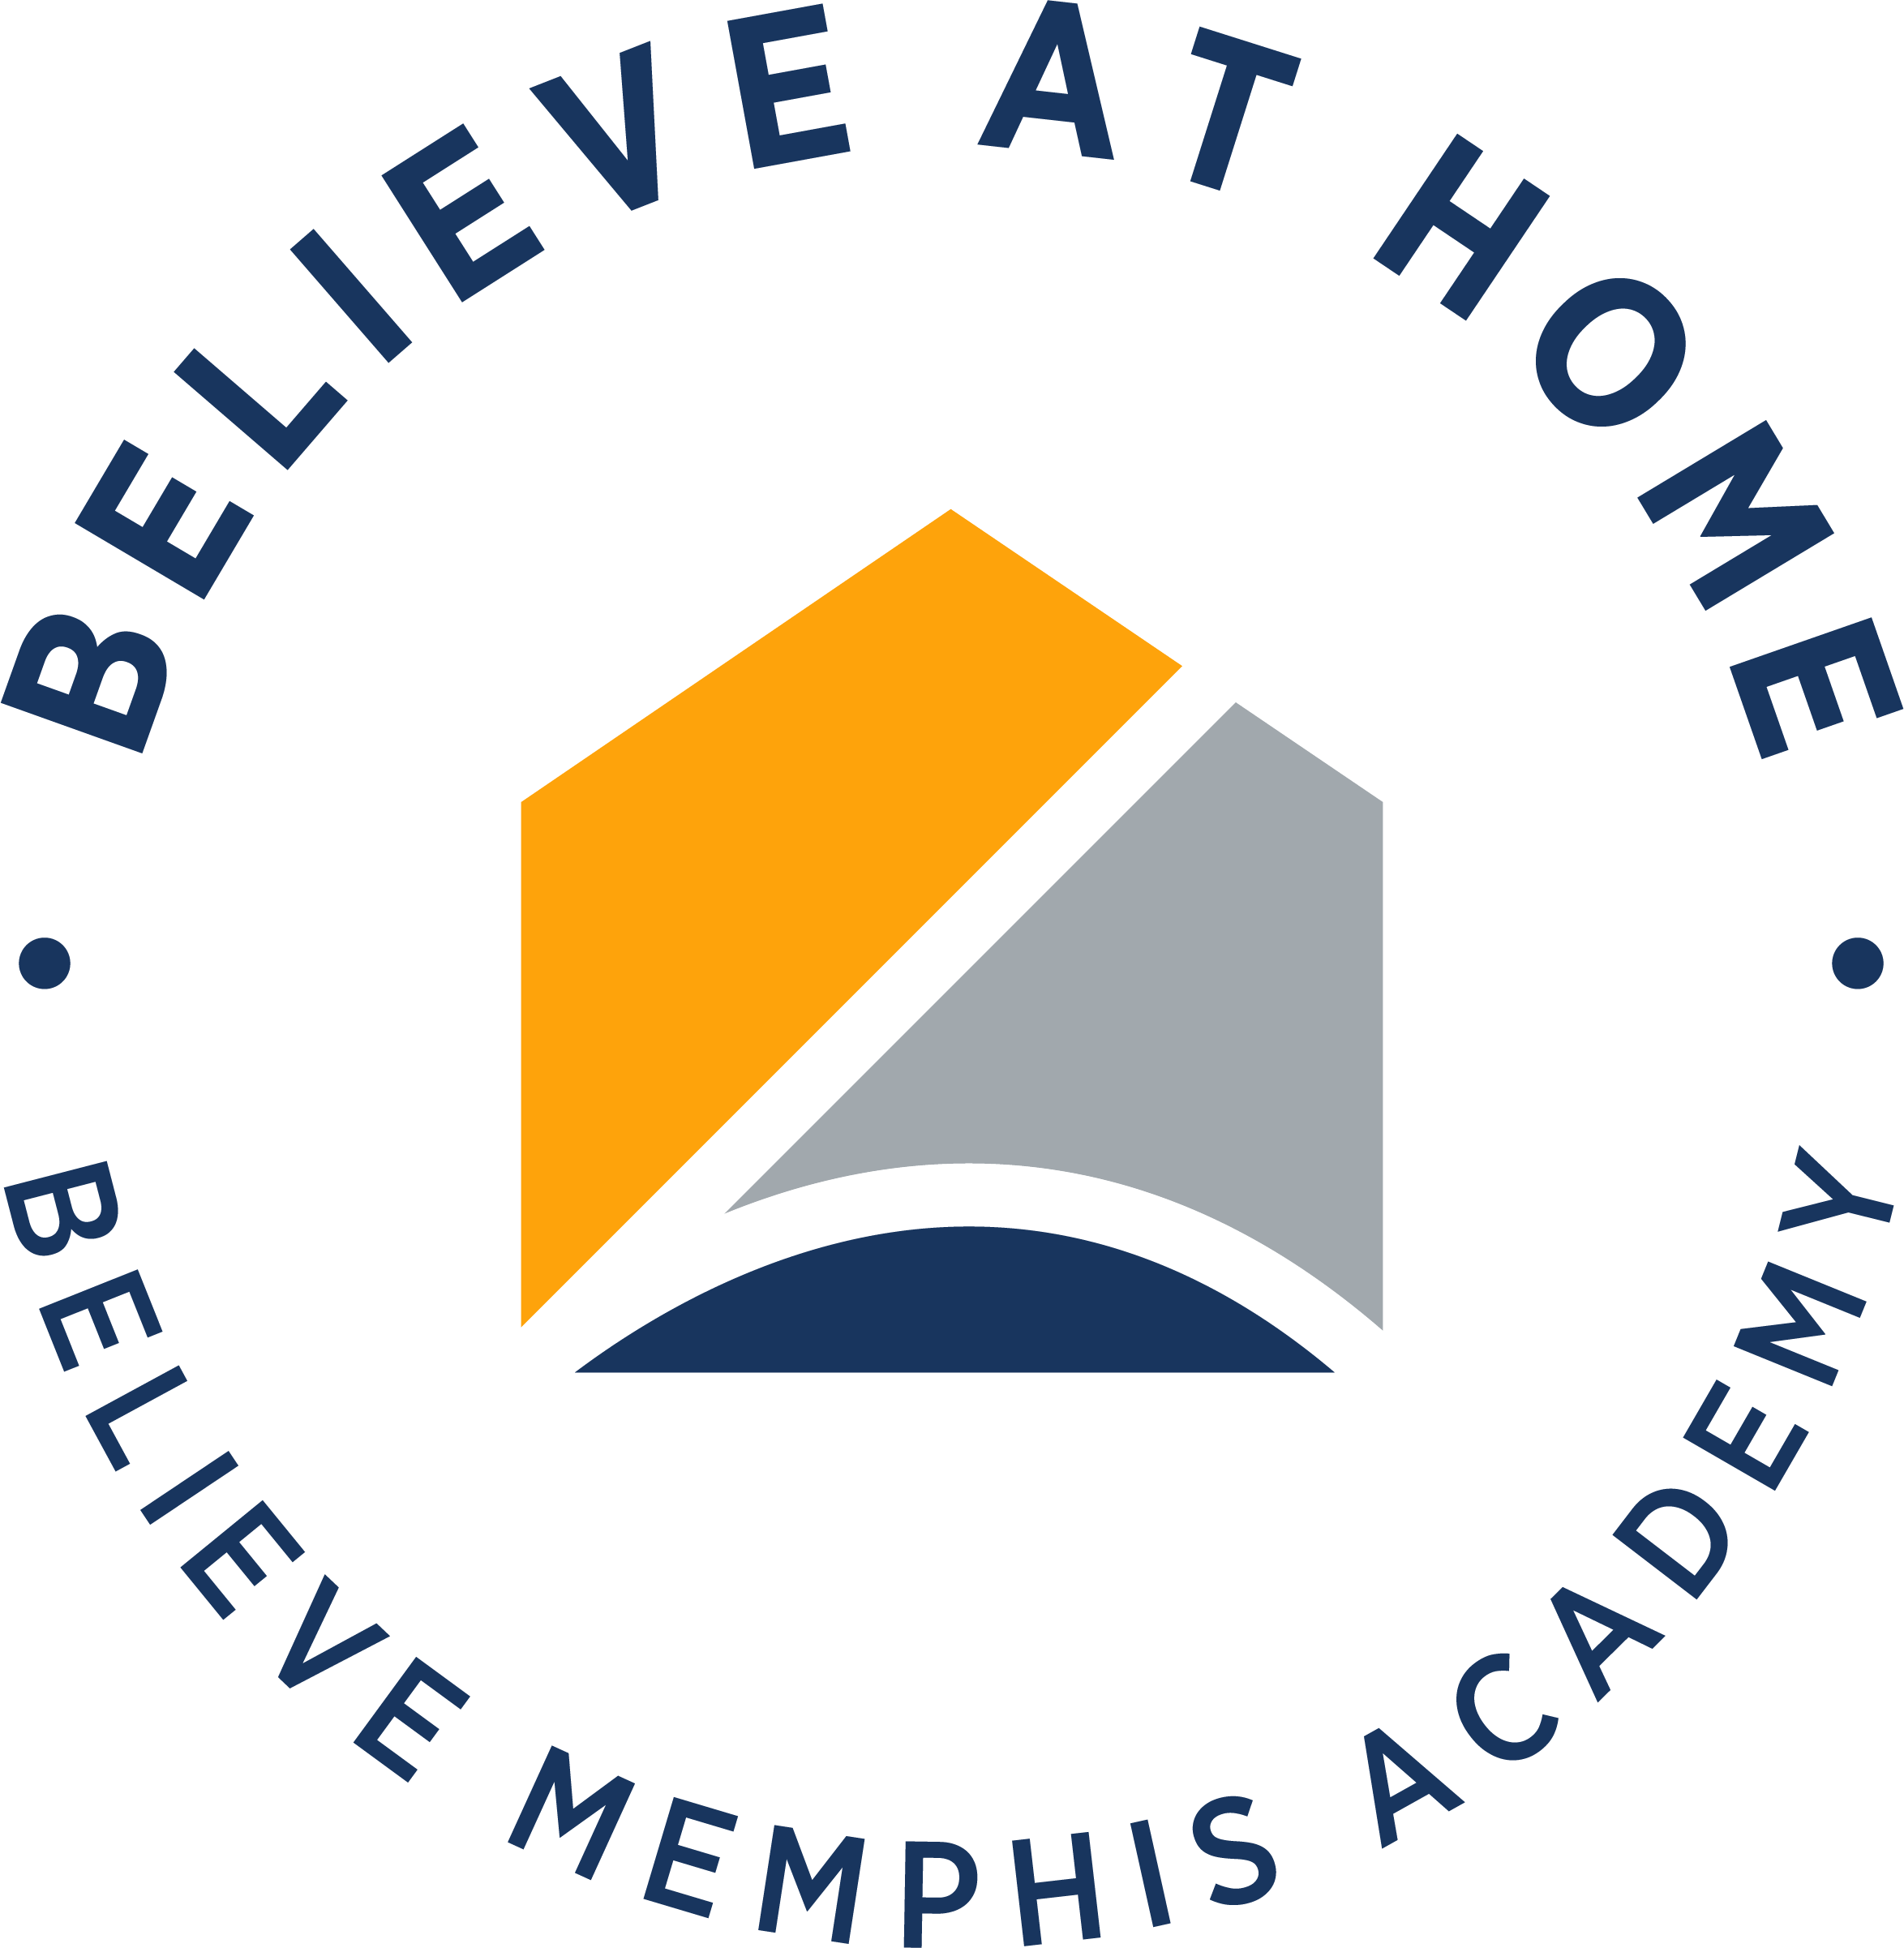 Believe Memphis Academy logo